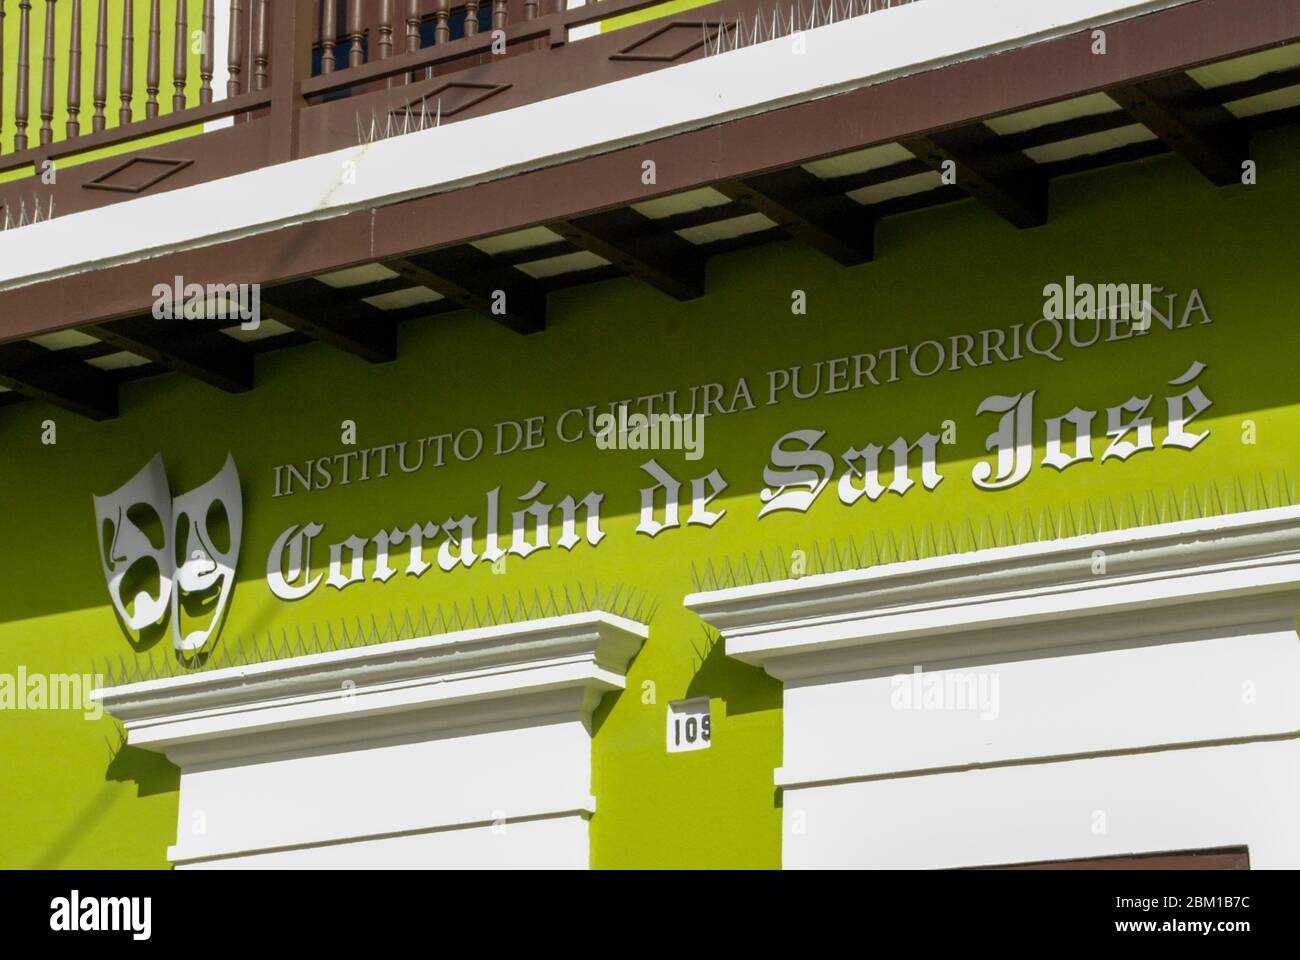 Corralón De San José wird vom Institut für Kultur in Puerto Rico (Instituto de Cultura Puertorriqueña) in der Altstadt von San Juan, der Hauptstadt von Puerto Rico, betrieben Stockfoto